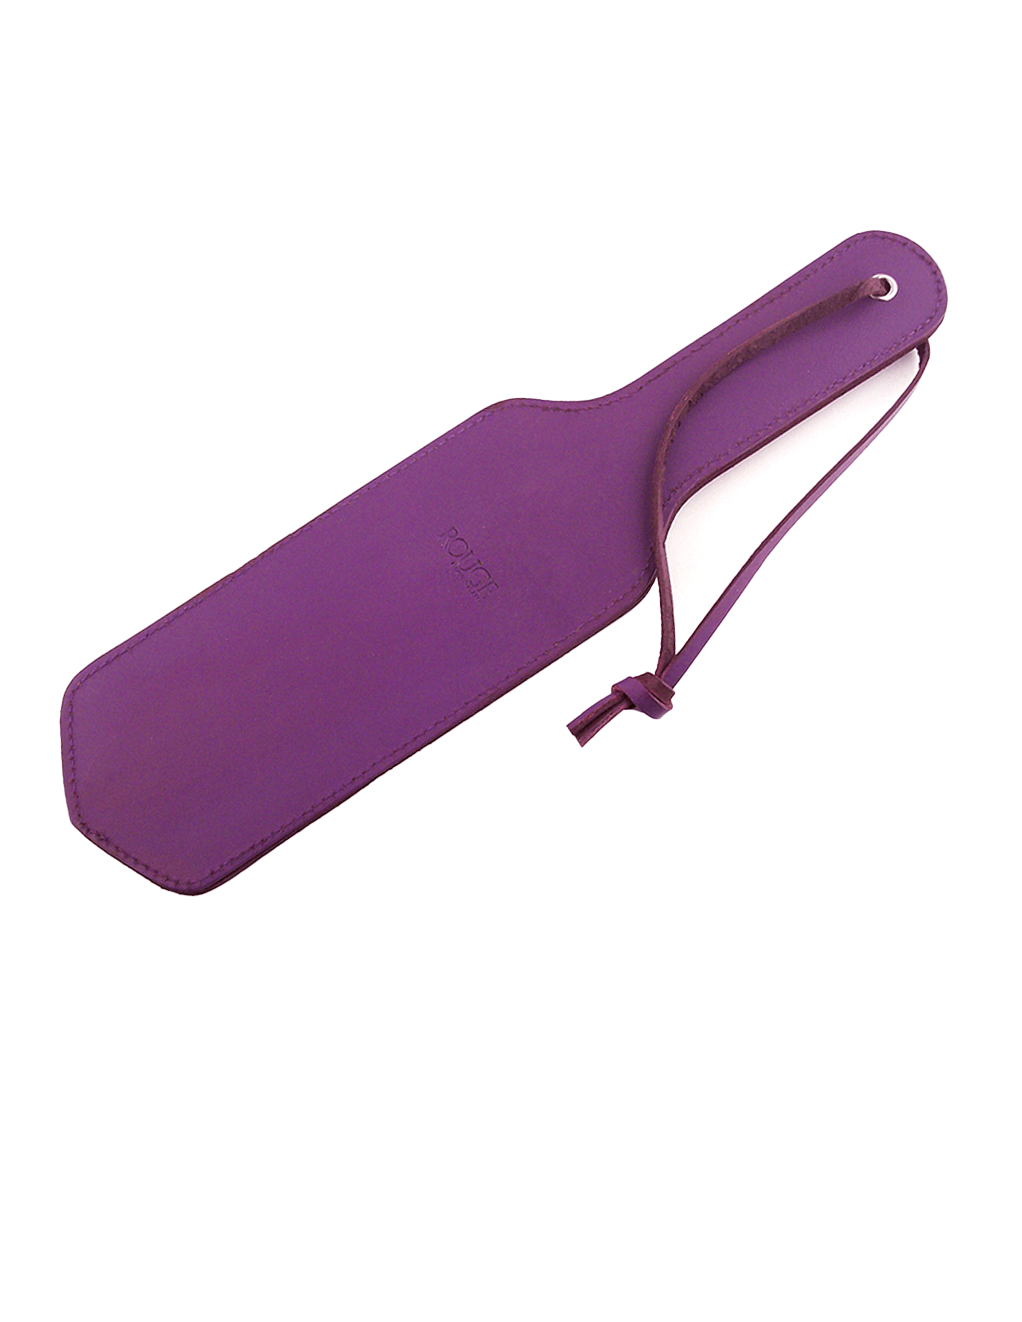 Rouge Short Leather Paddle - Purple